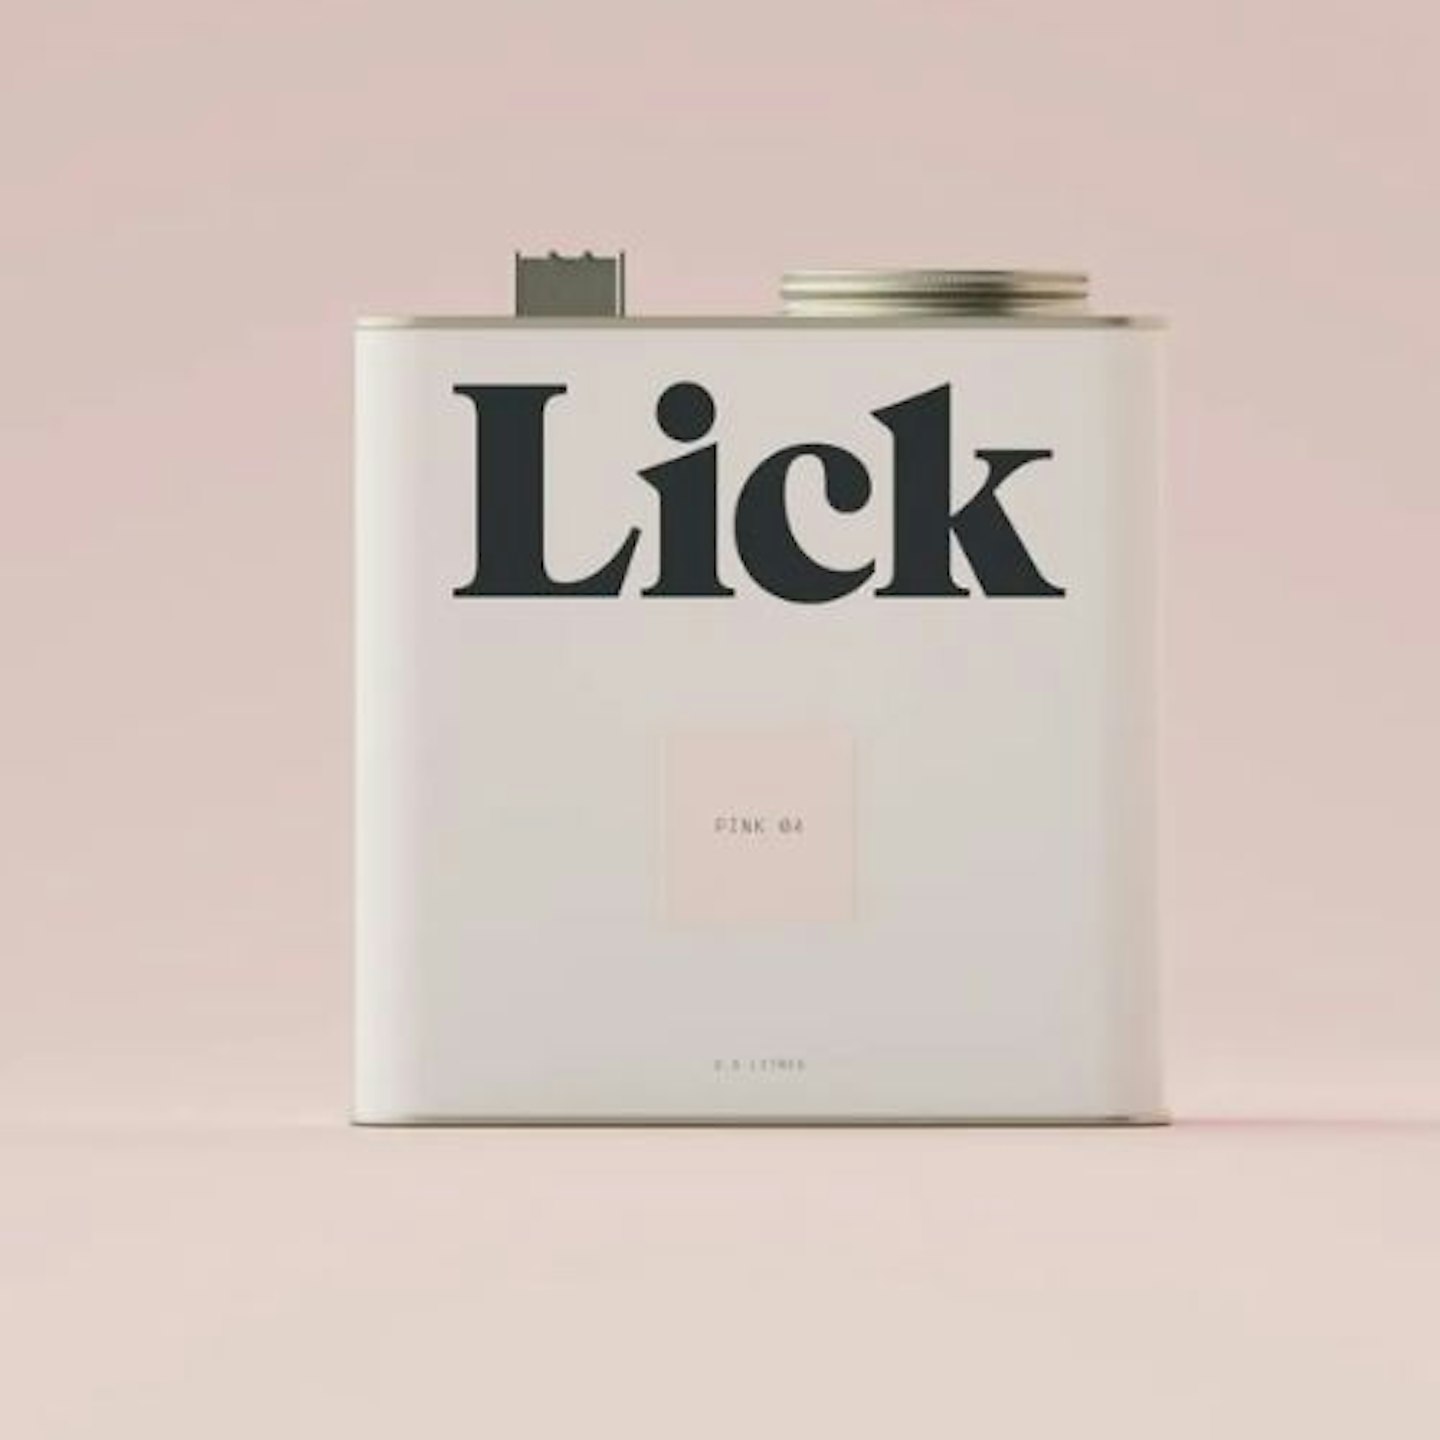 Lick Exterior in Pink 04, 2.5L